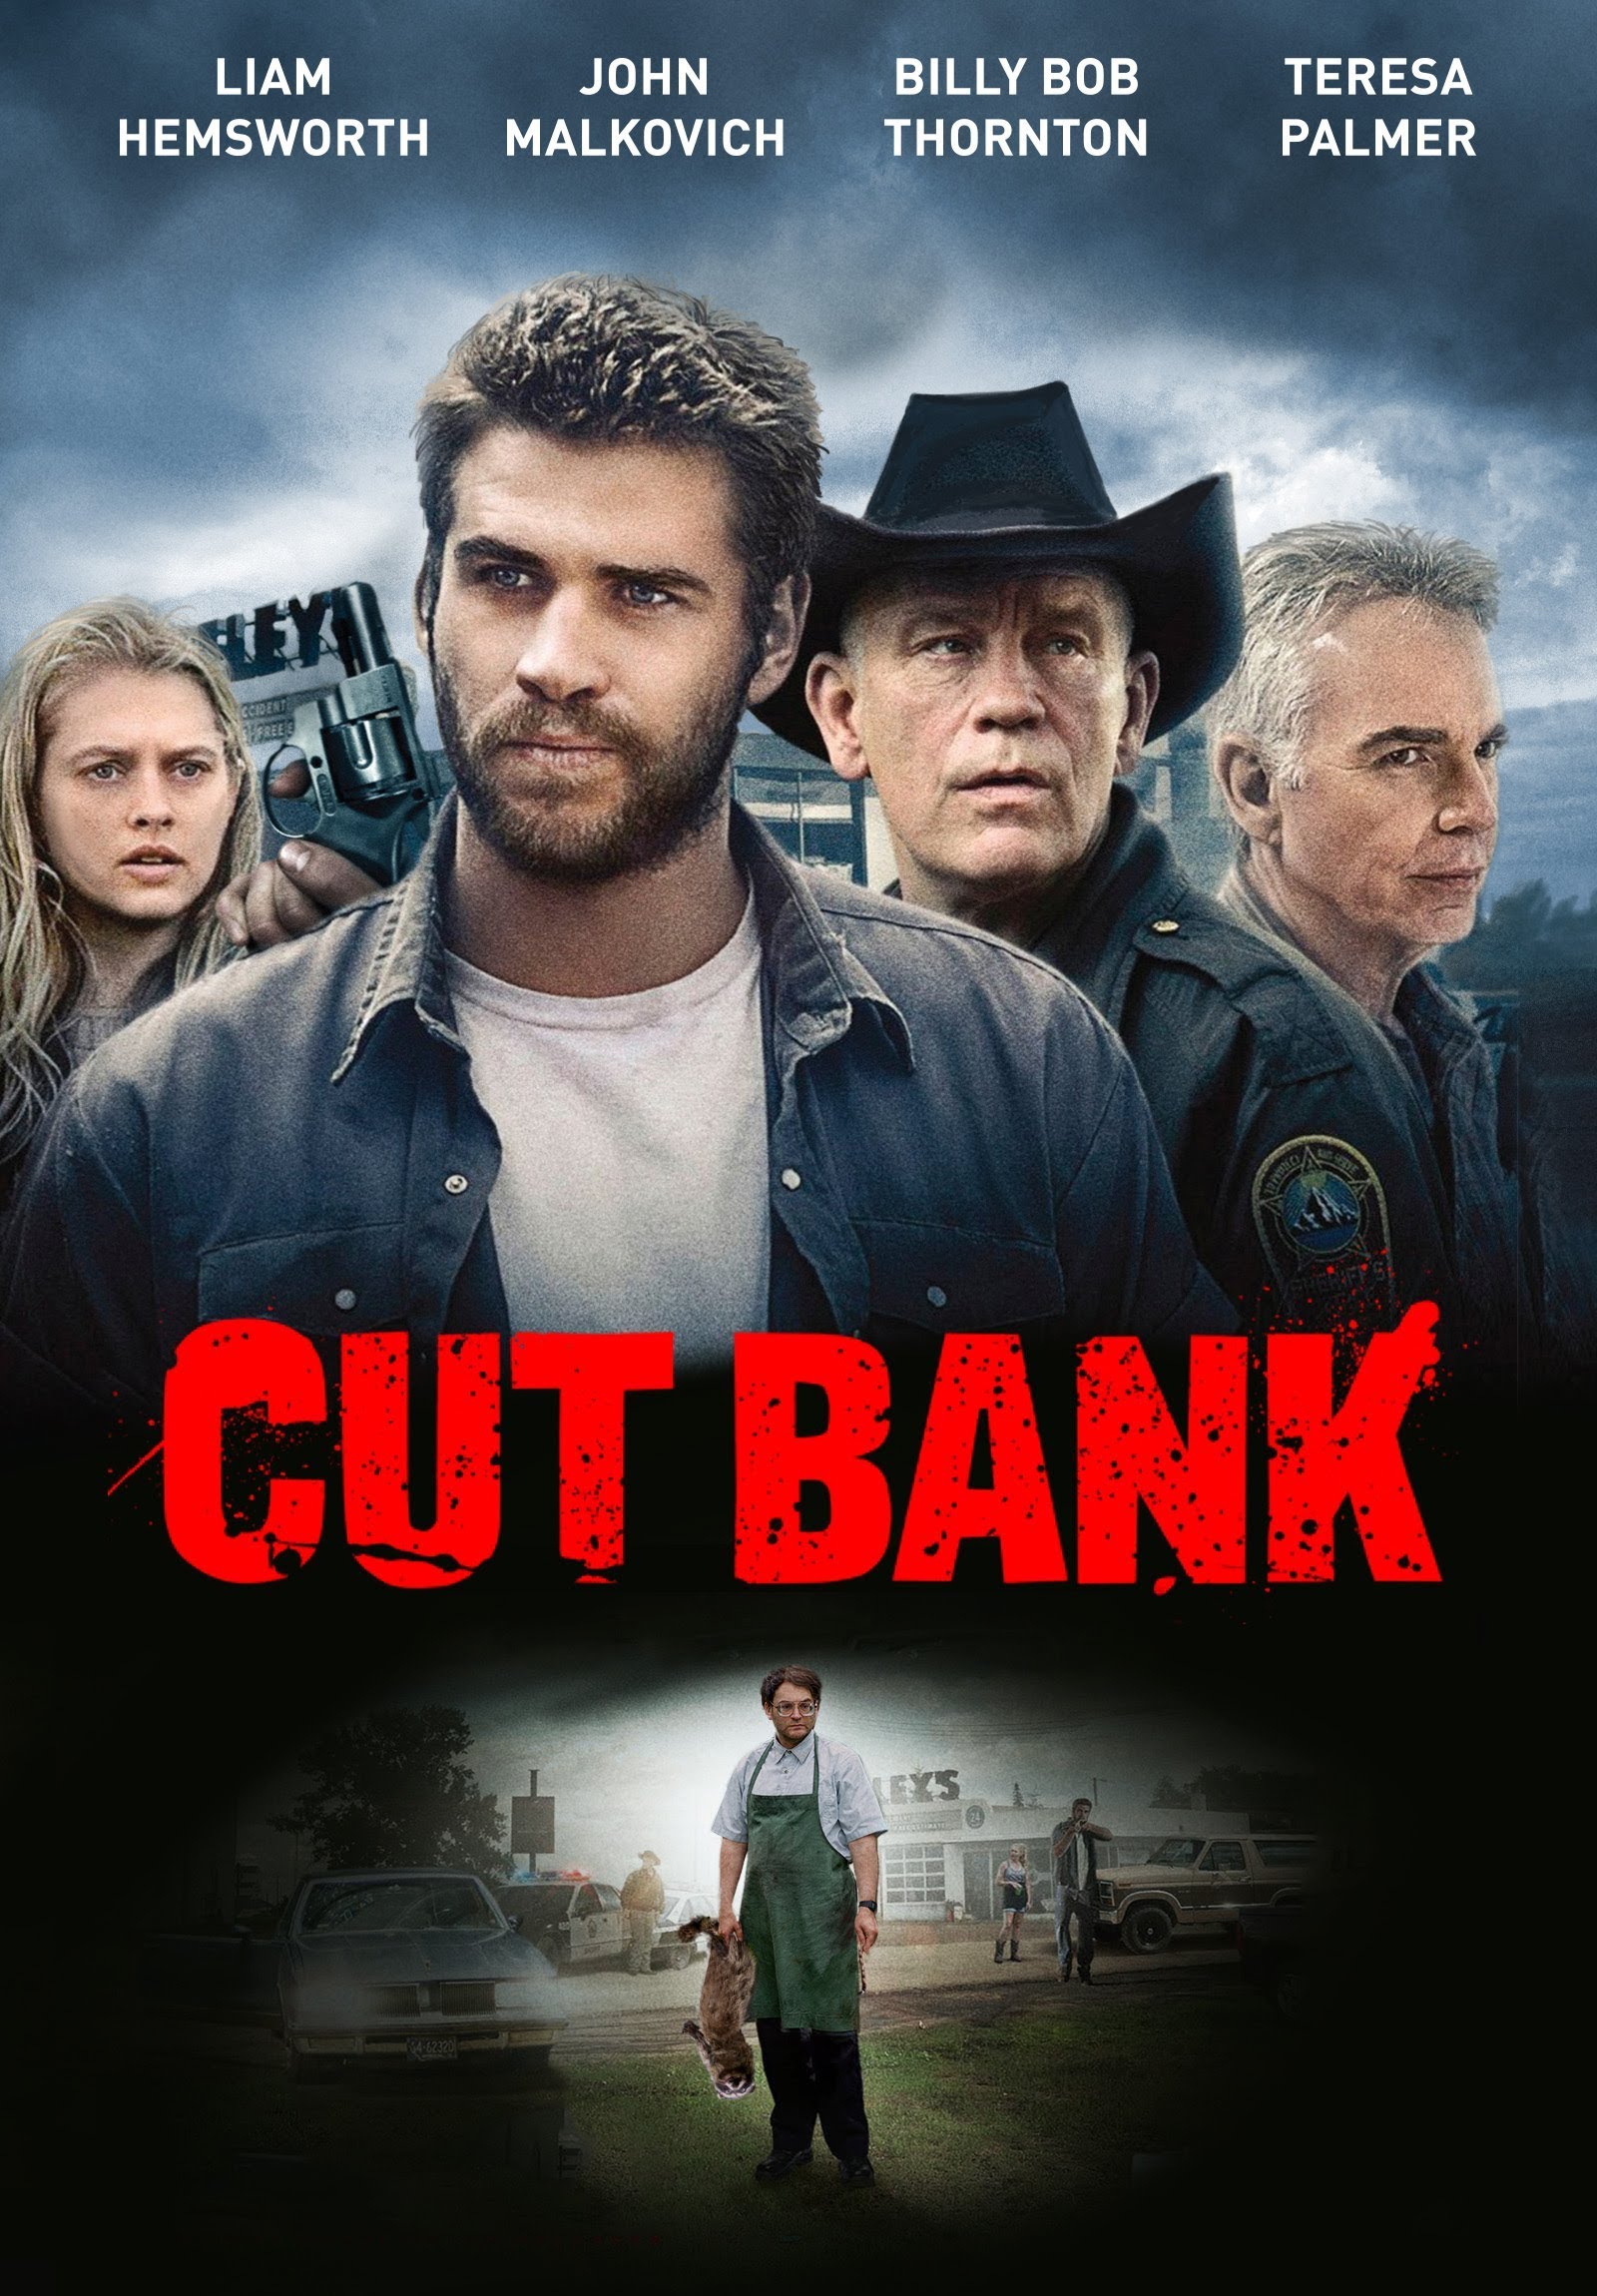 Cut Bank [HD] (2014)